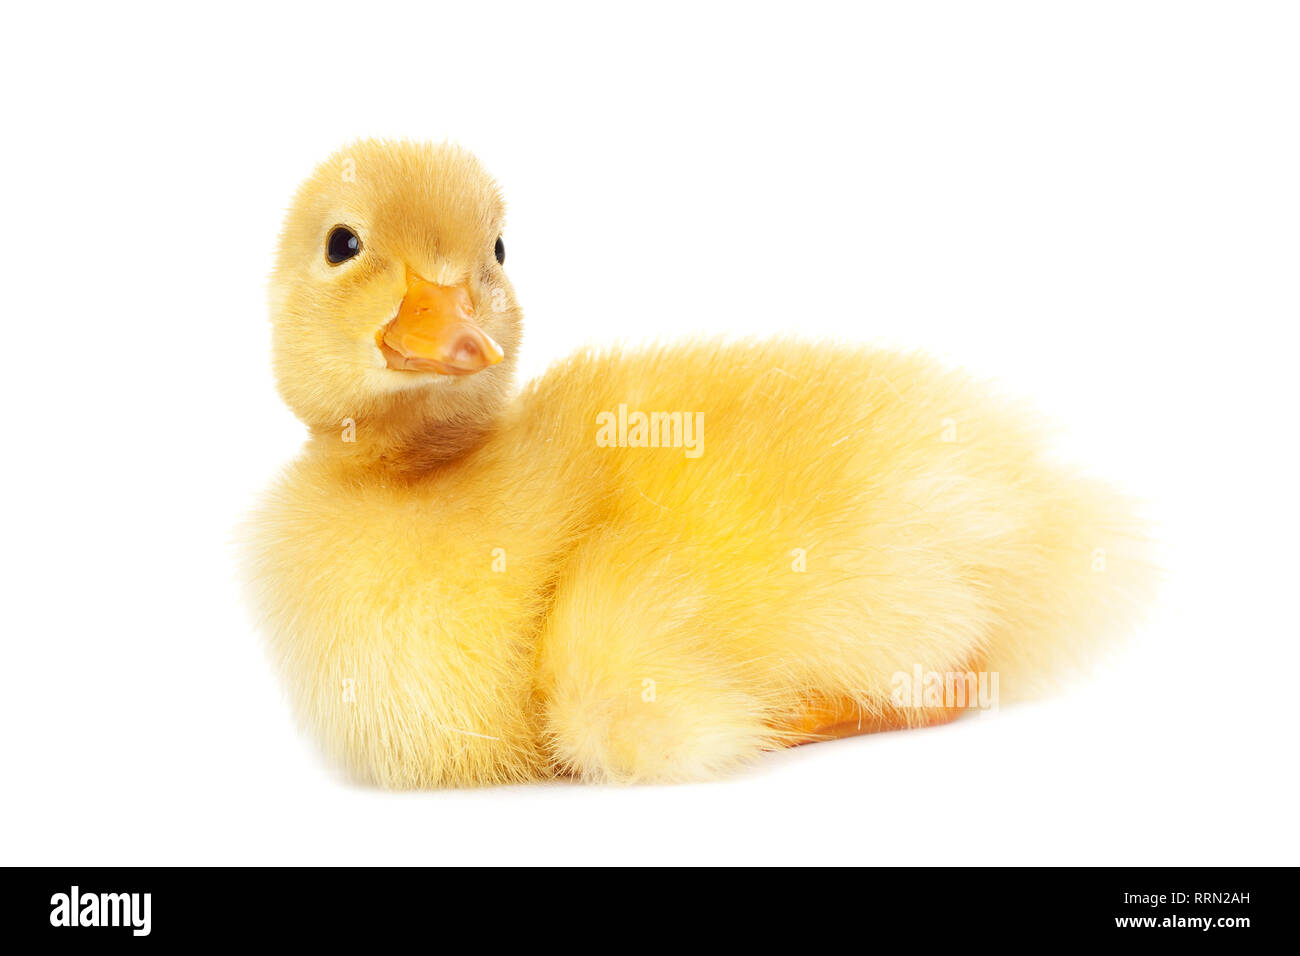 Cute animal baby duck isolated Stock Photo